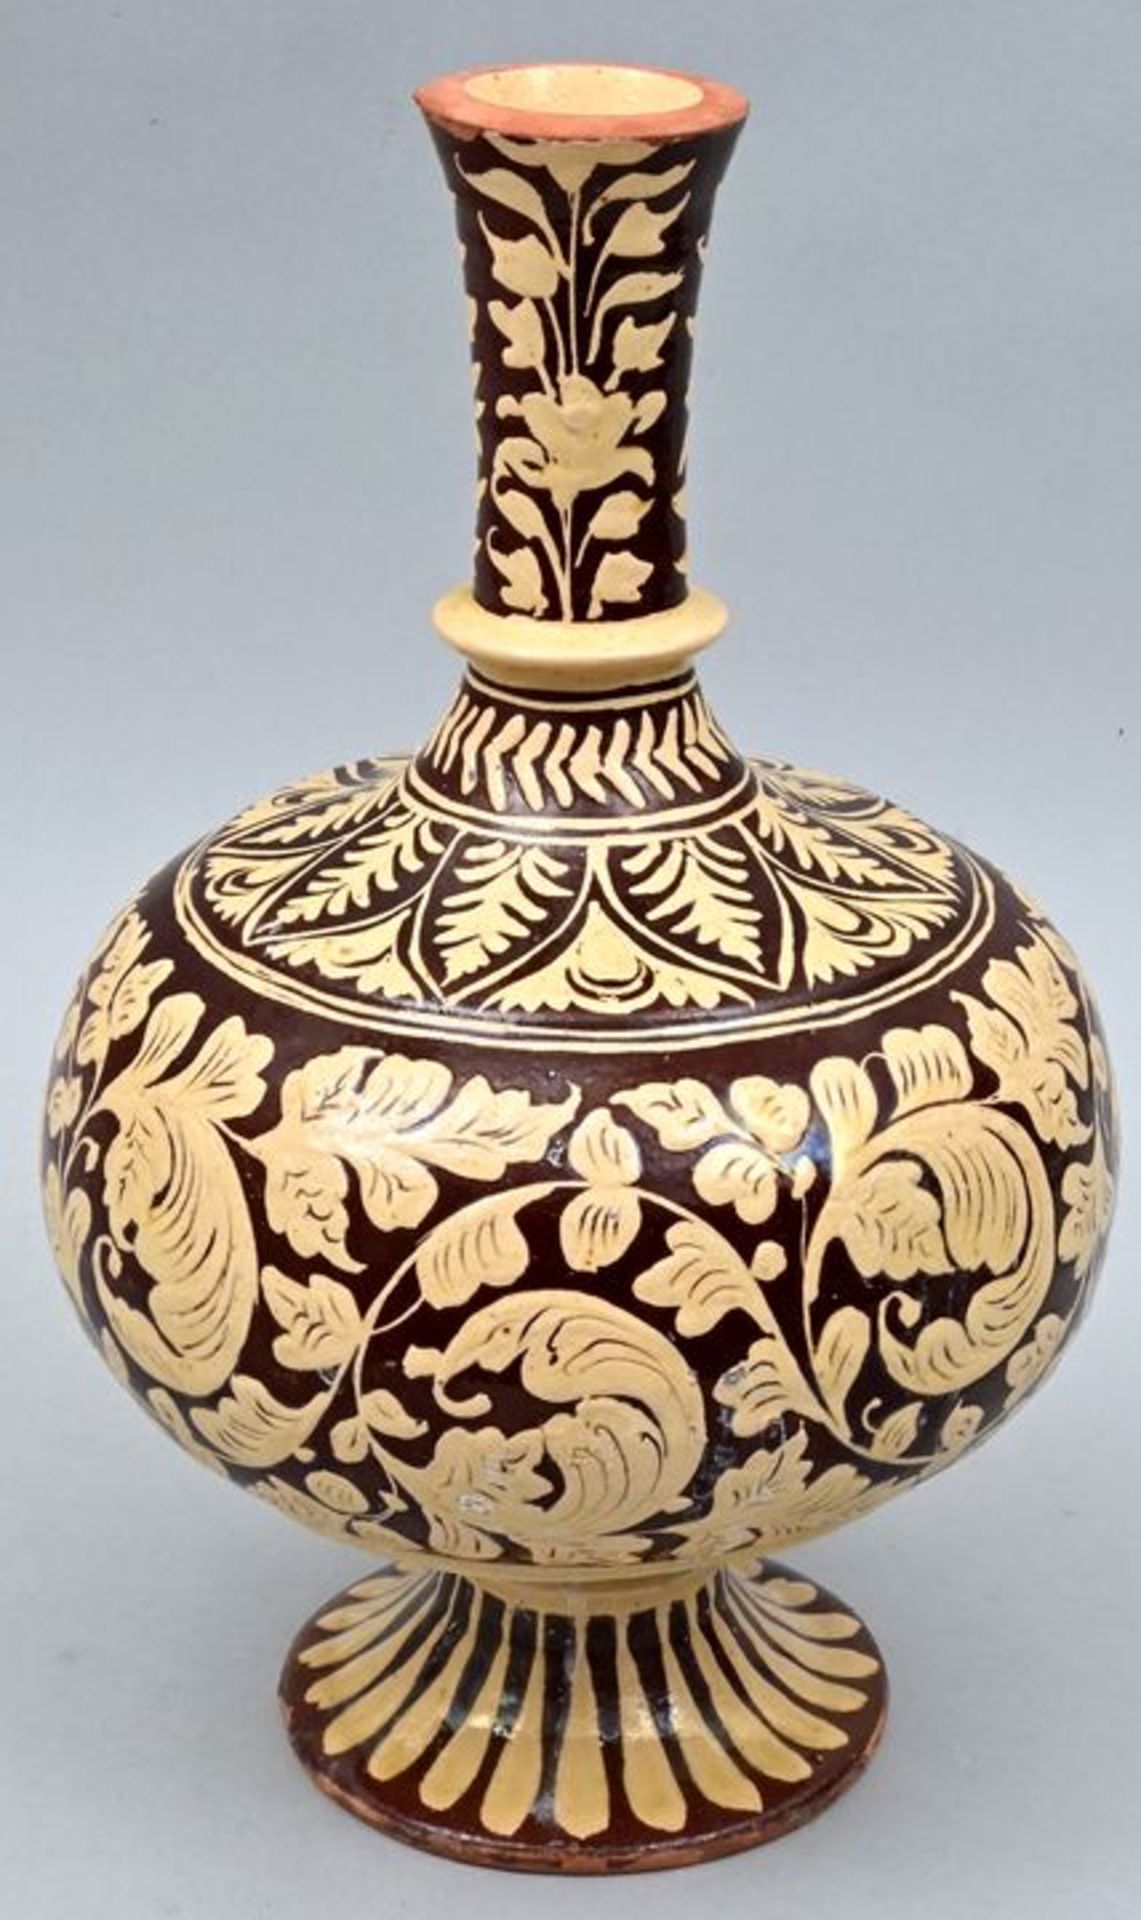 Kugelbauchvase, Keramik / Bottle, Vase